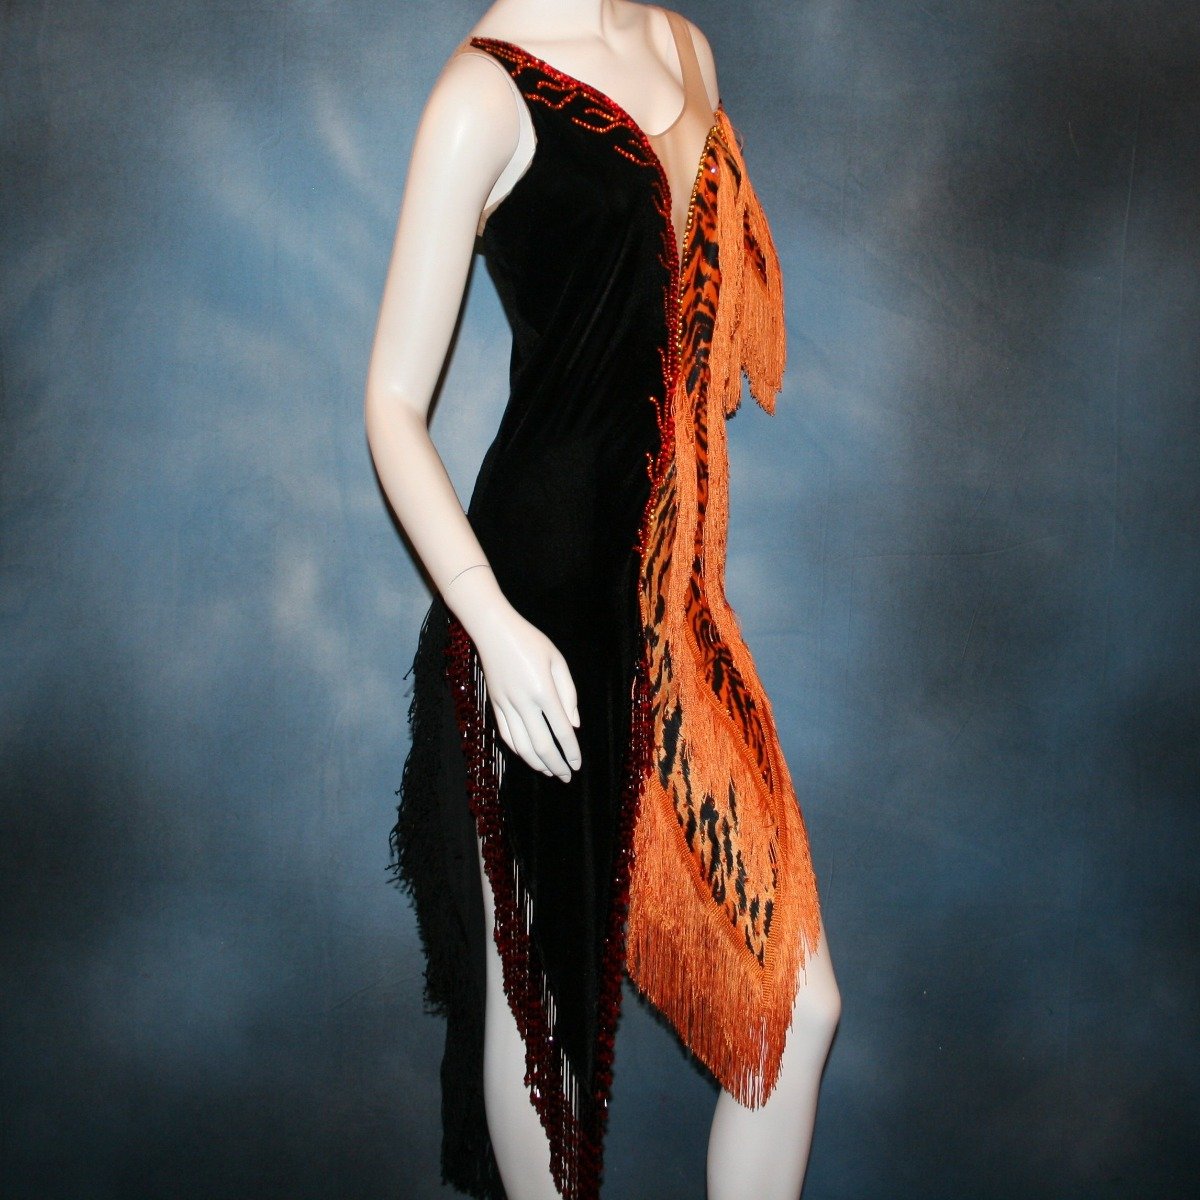 Crystal's Creations side close up view of orange & black tiger print Latin/rhythm dress with fringe